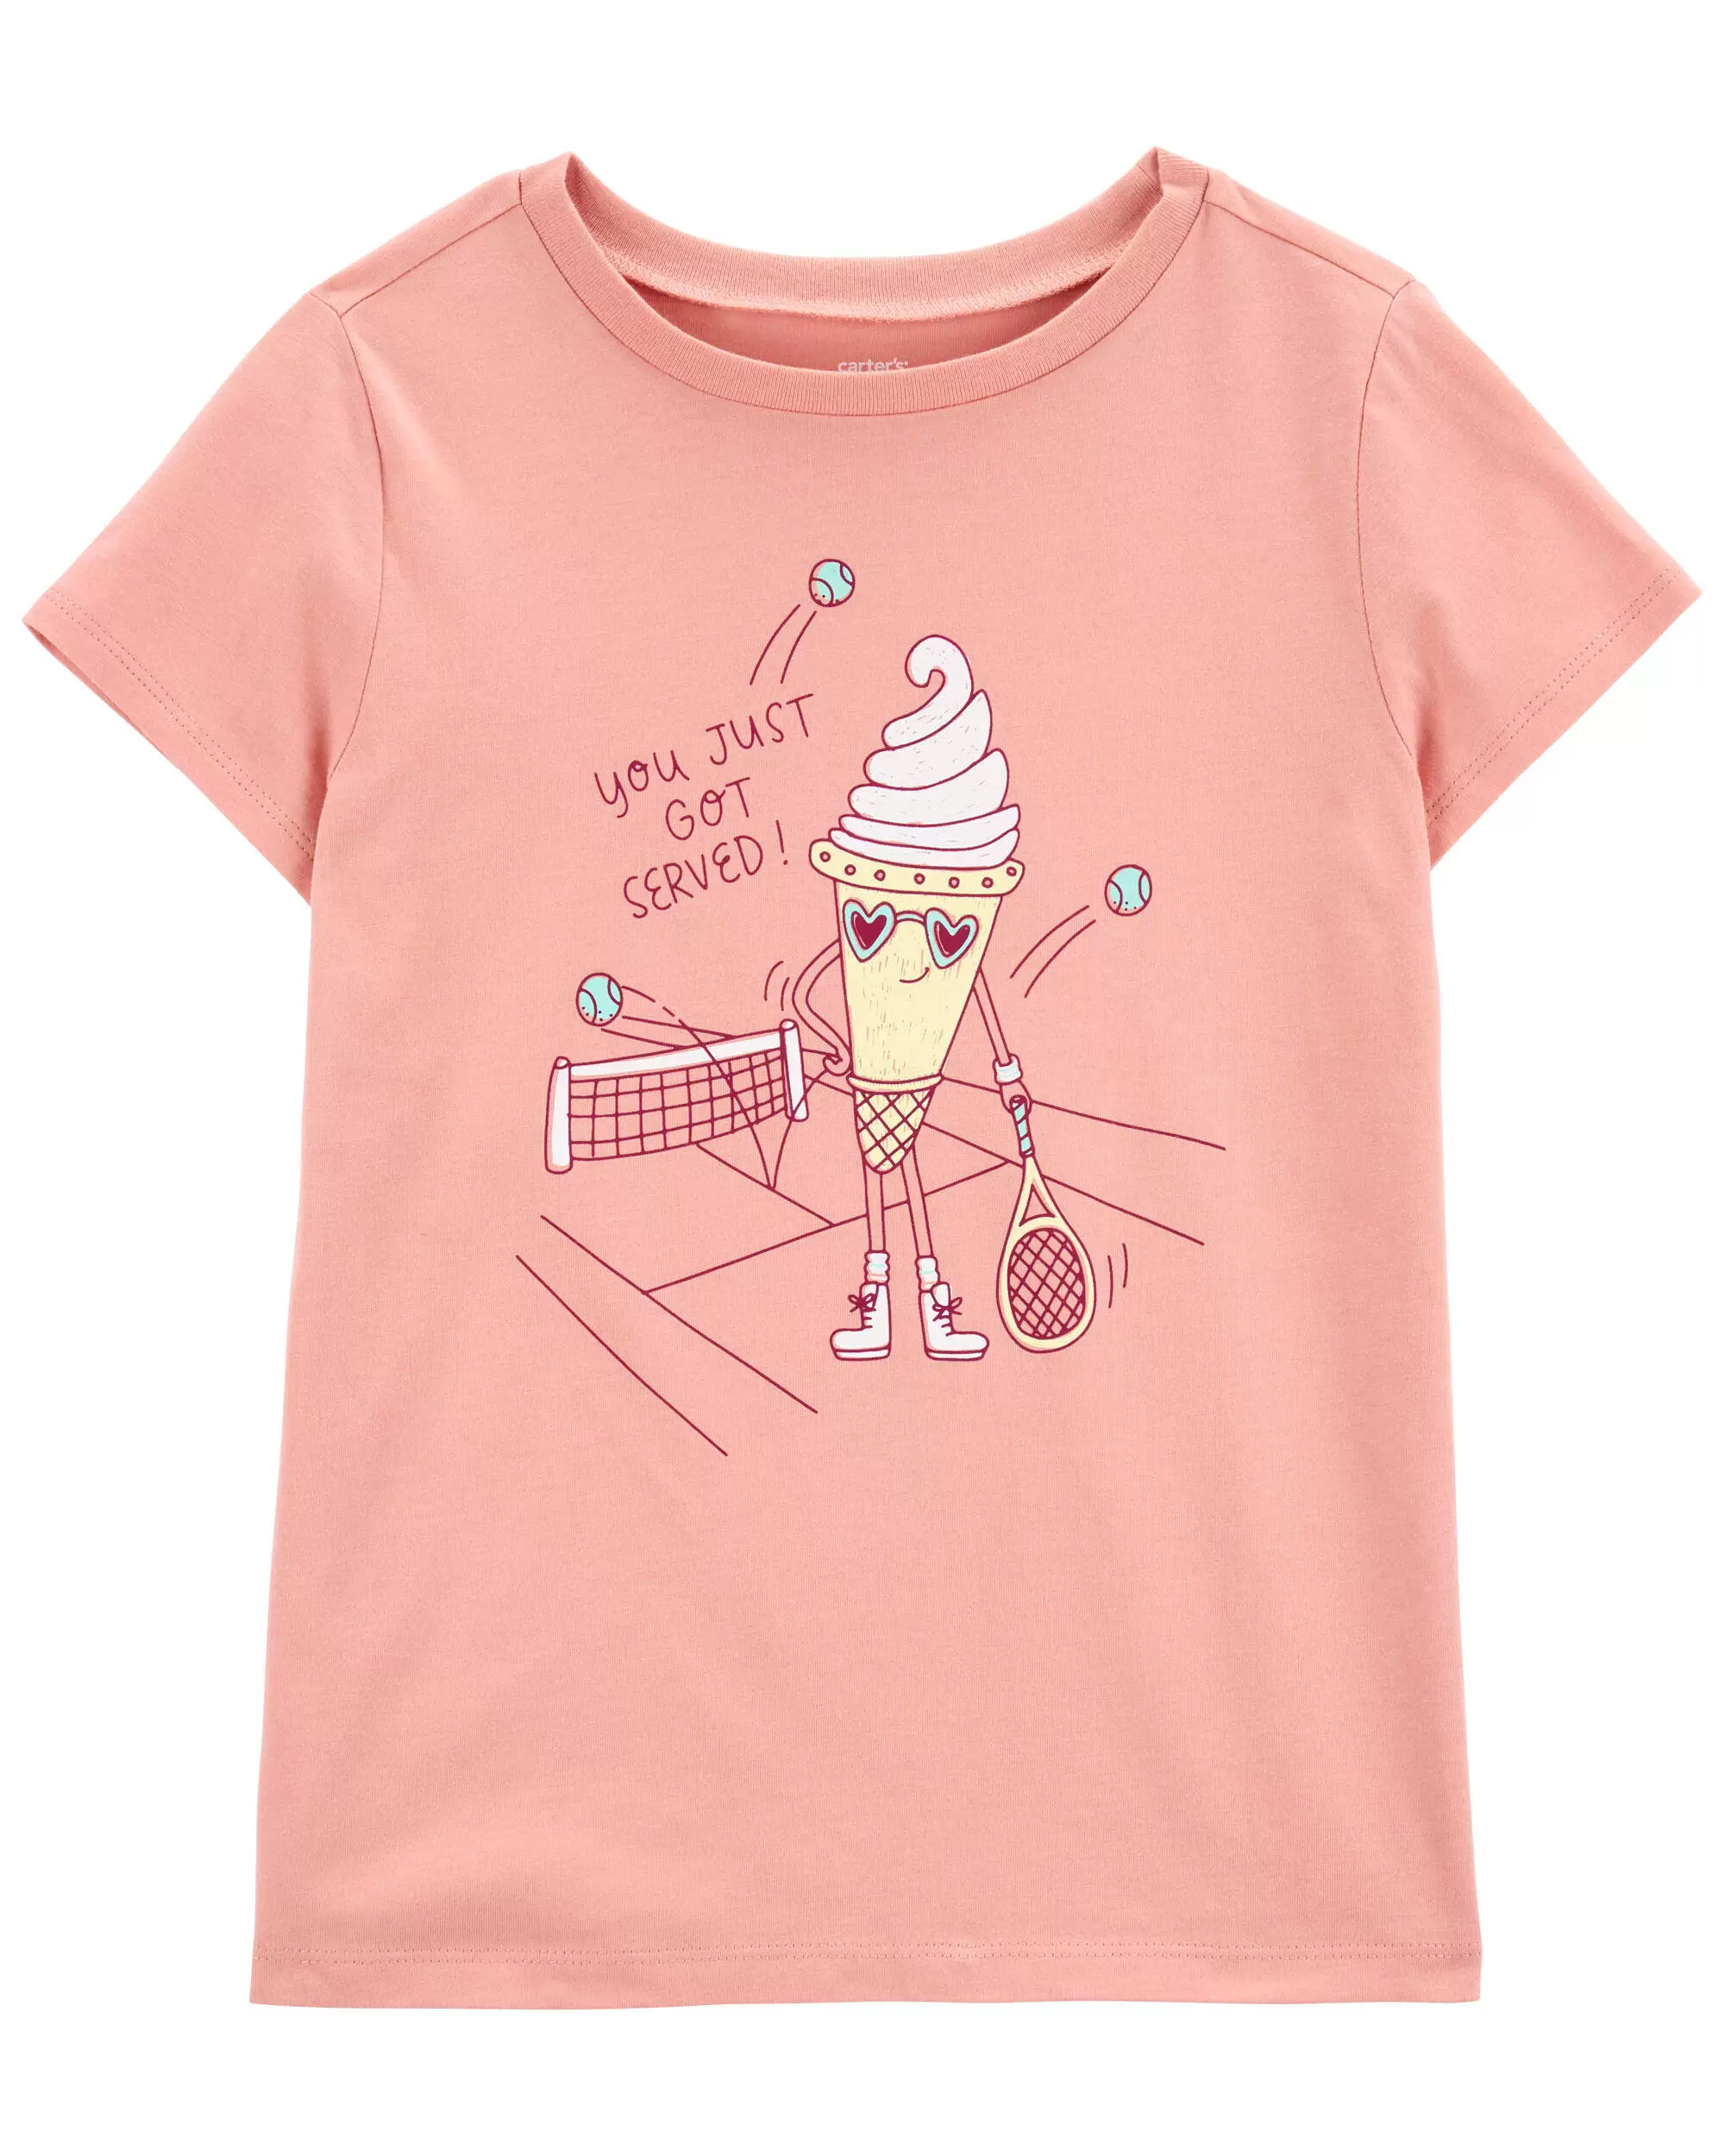 Детская футболка с рисунком мороженого Carter's